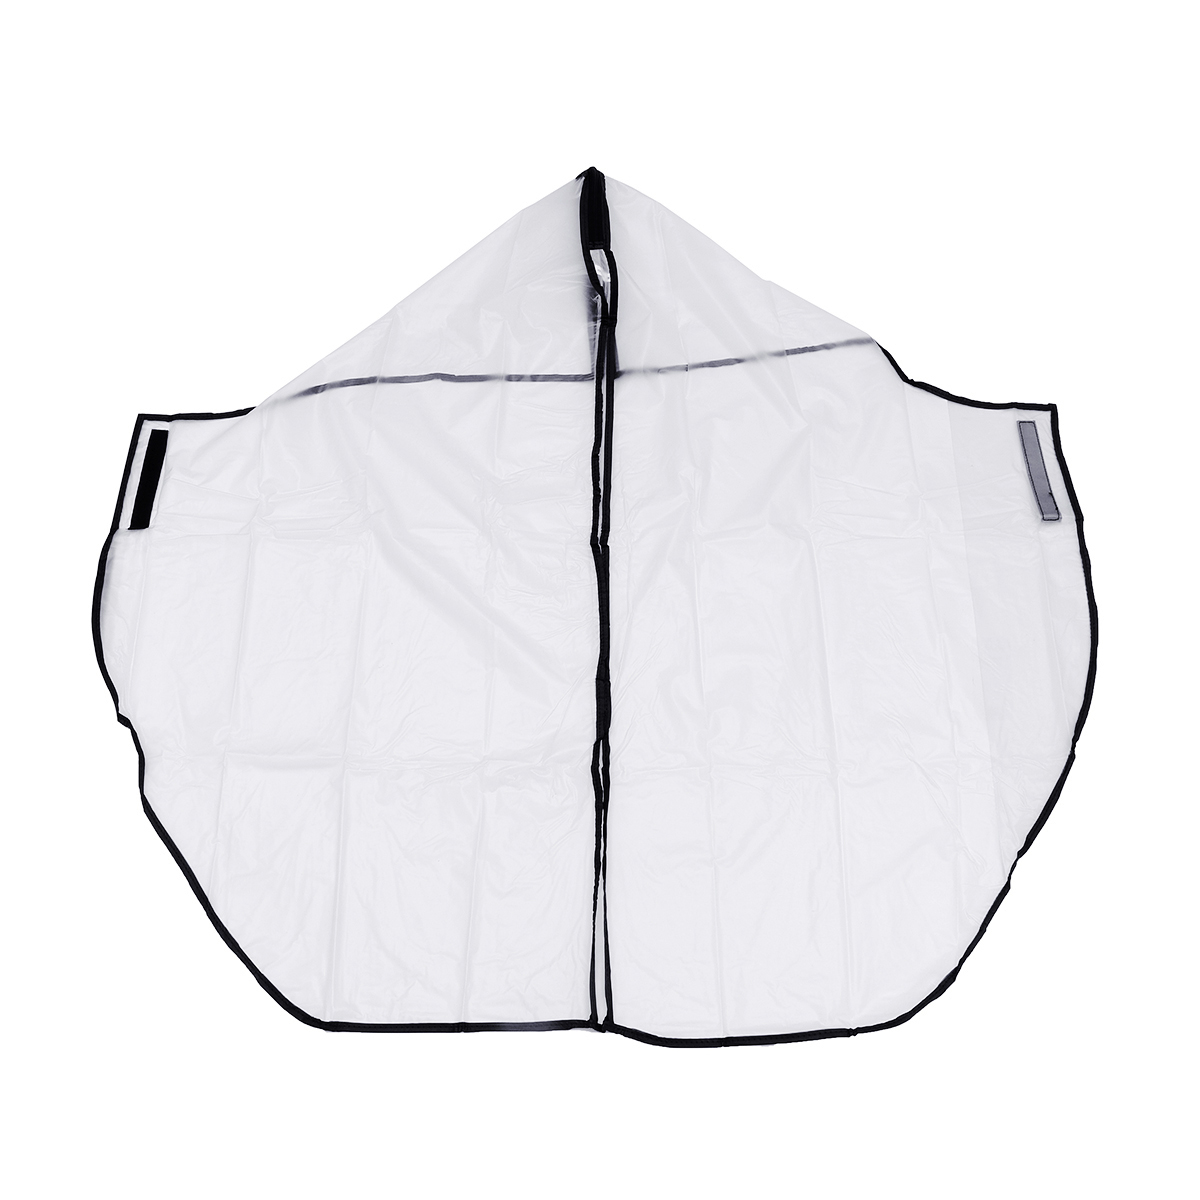 Transparent-Golf-Rain-Cover-Raincoat-Waterproof-Dustproof-Golf-Club-Bag-Protector-1549850-5